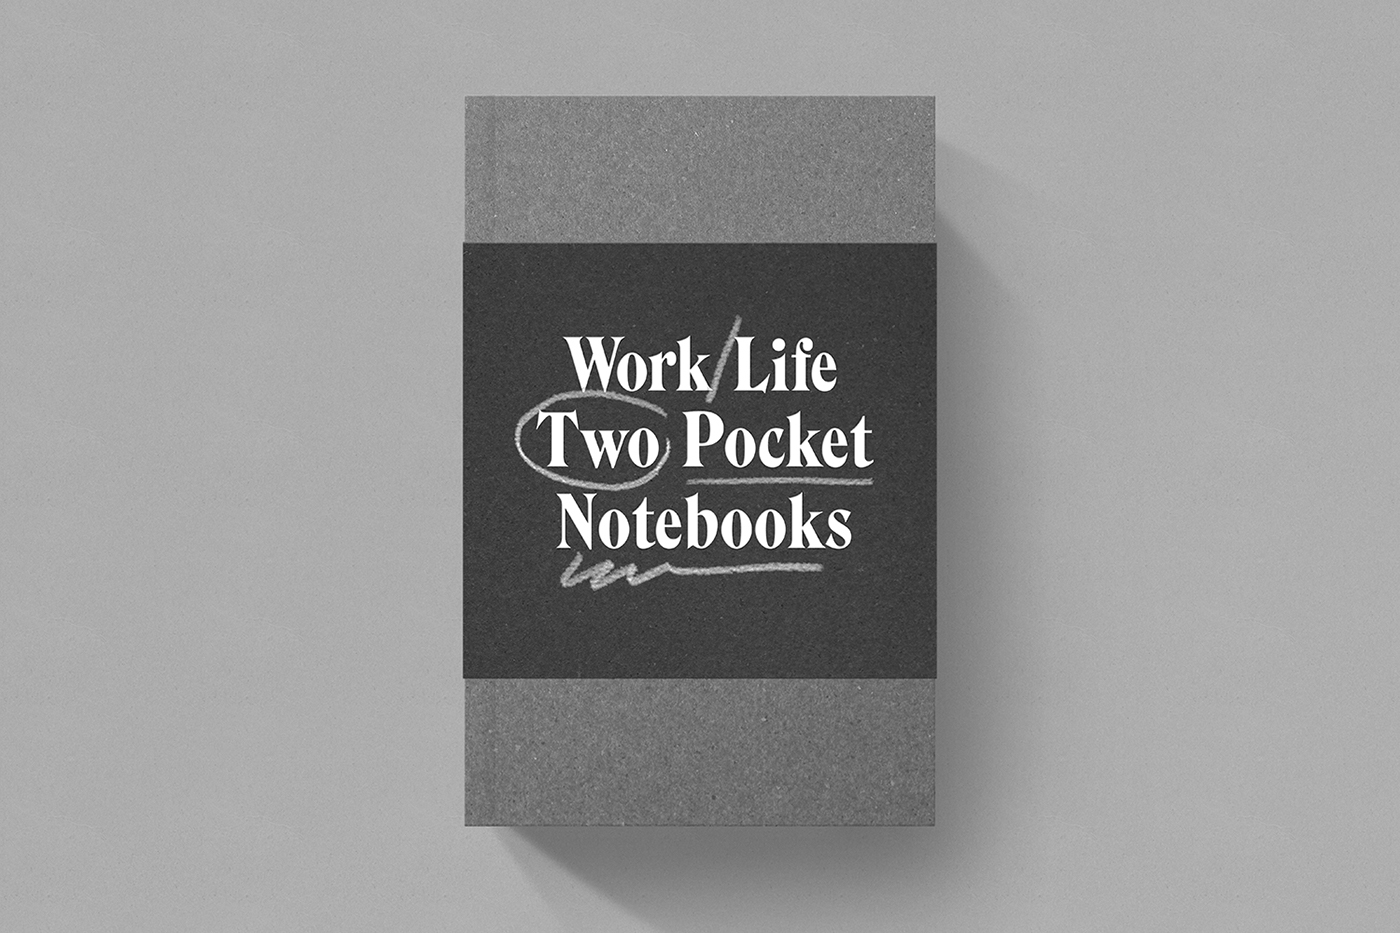 work/life Fabrica design Italy Treviso print notecard calendar notebook